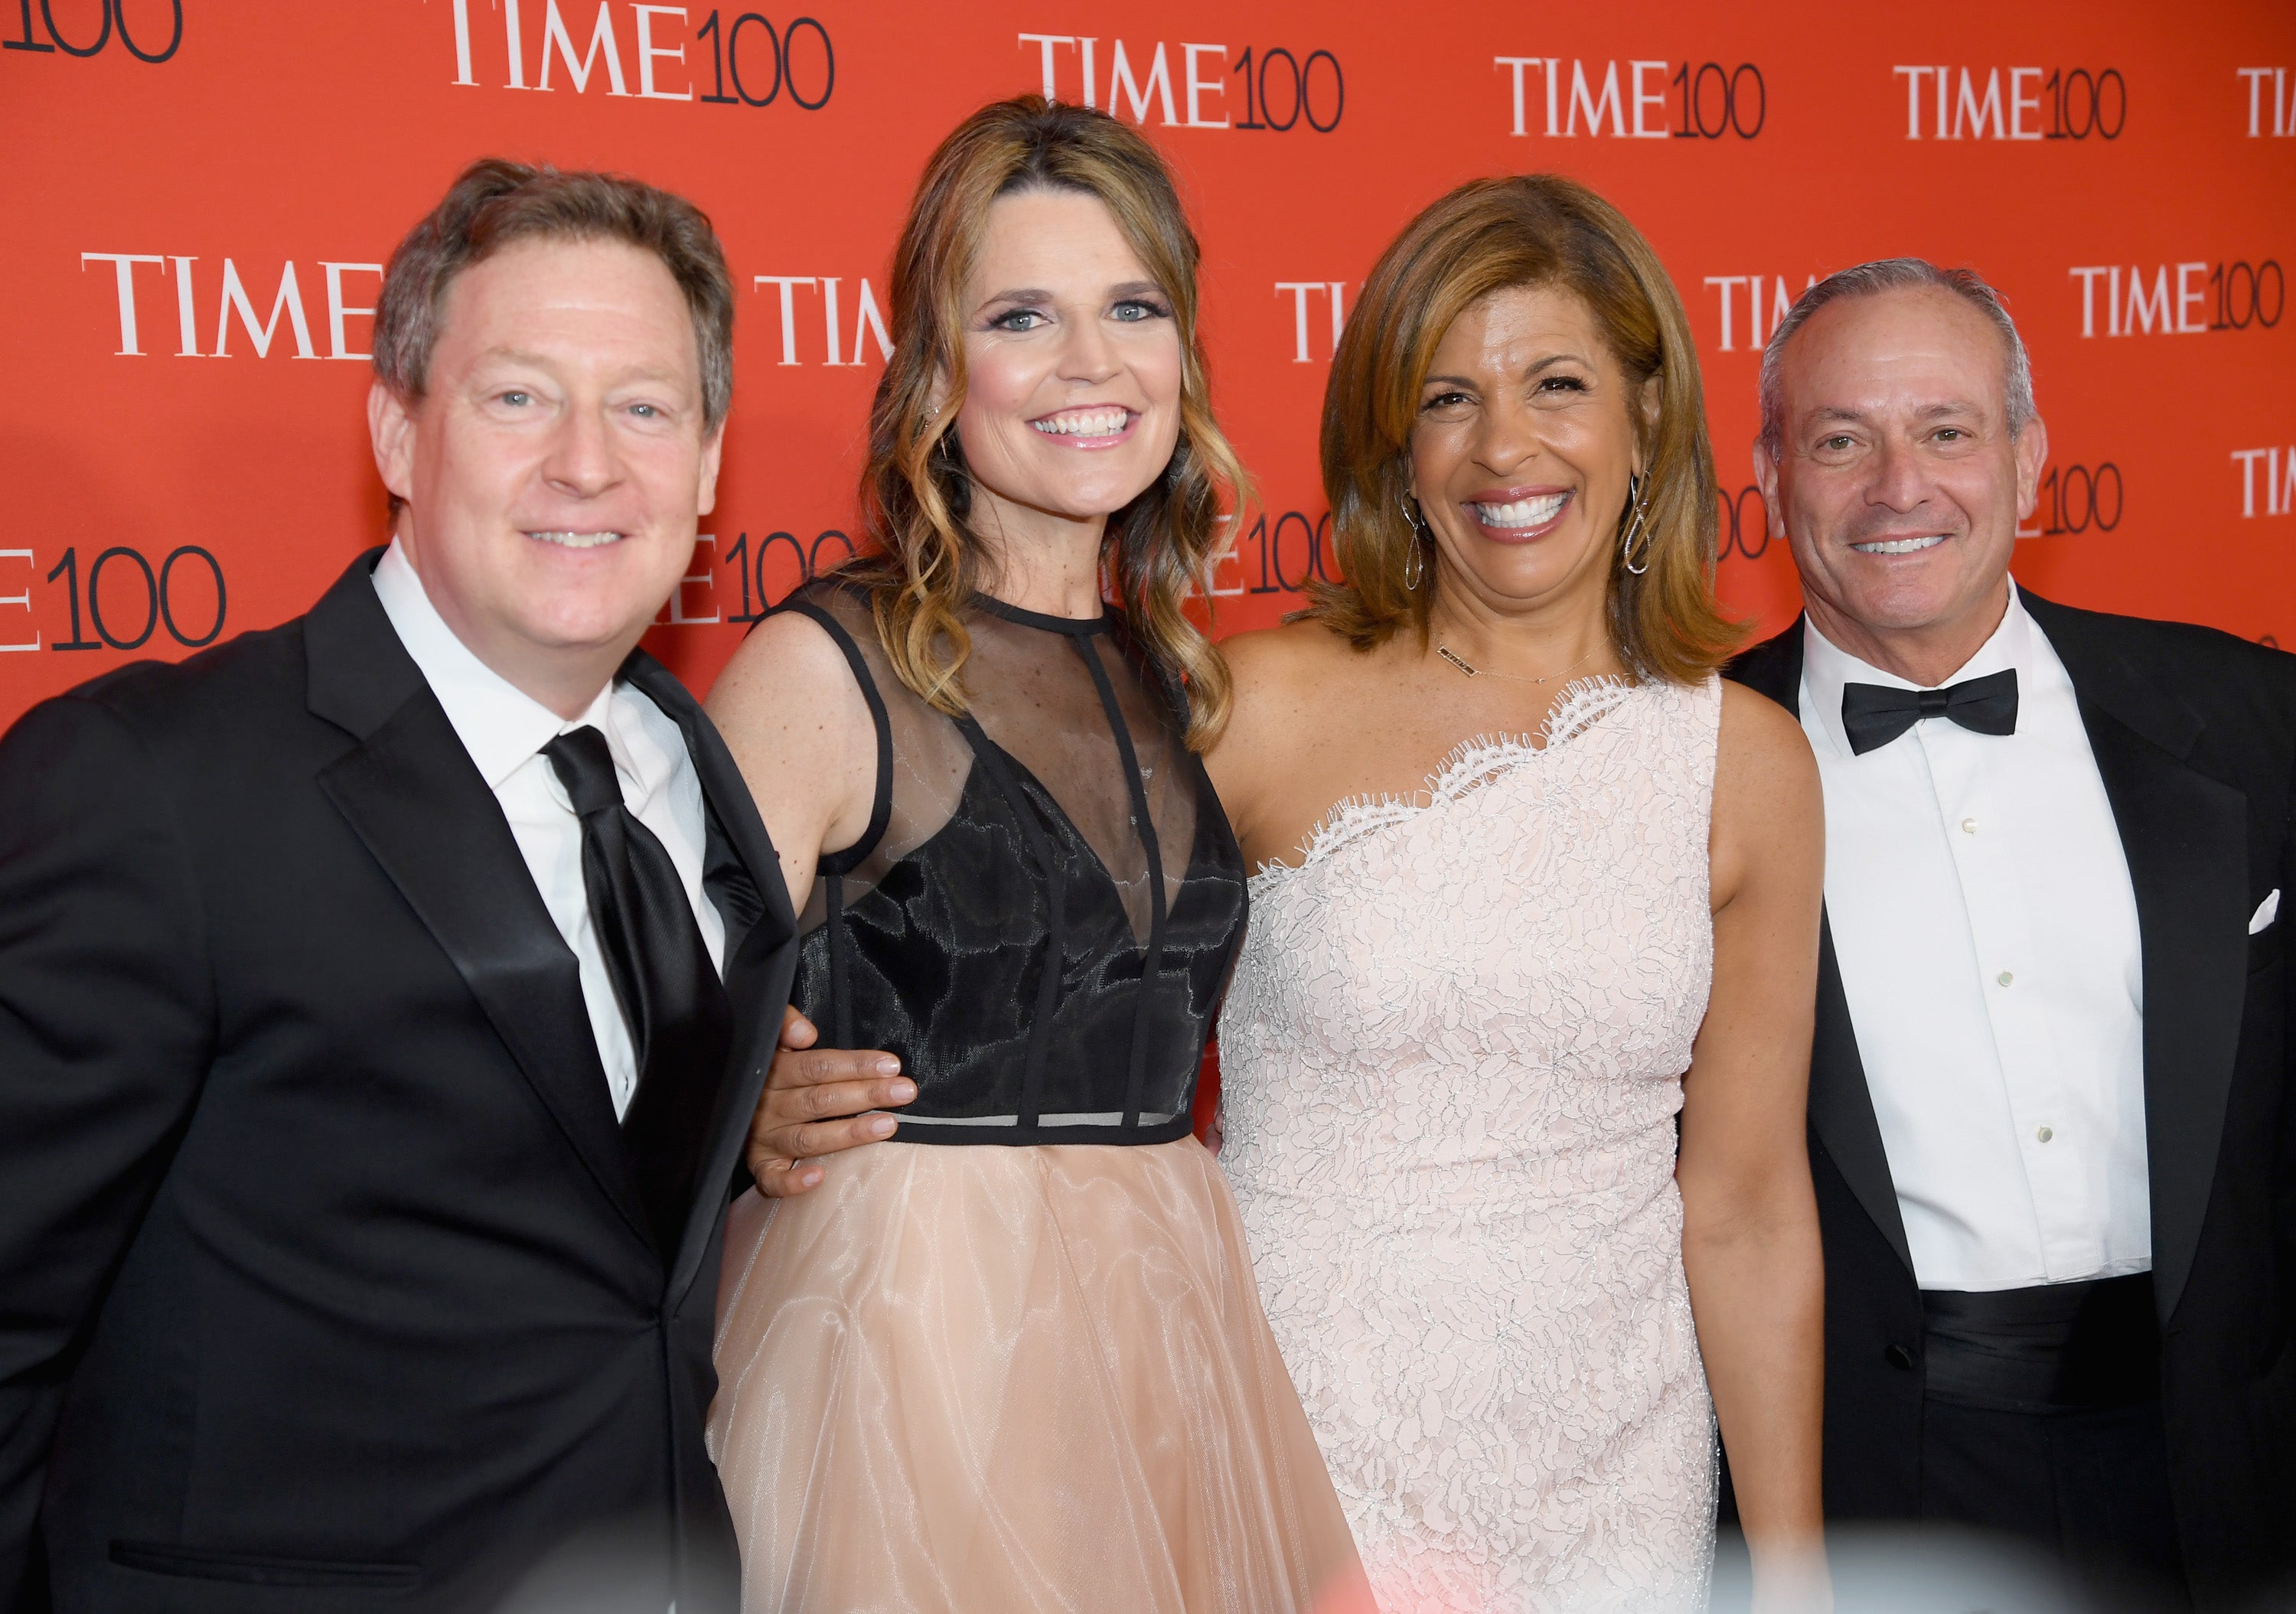 Michael Feldman, Savannah Guthrie, Hoda Kotb, and Joel Schiffman attend the 2018 Time 100 Gala on 24 April 2018 in New York City